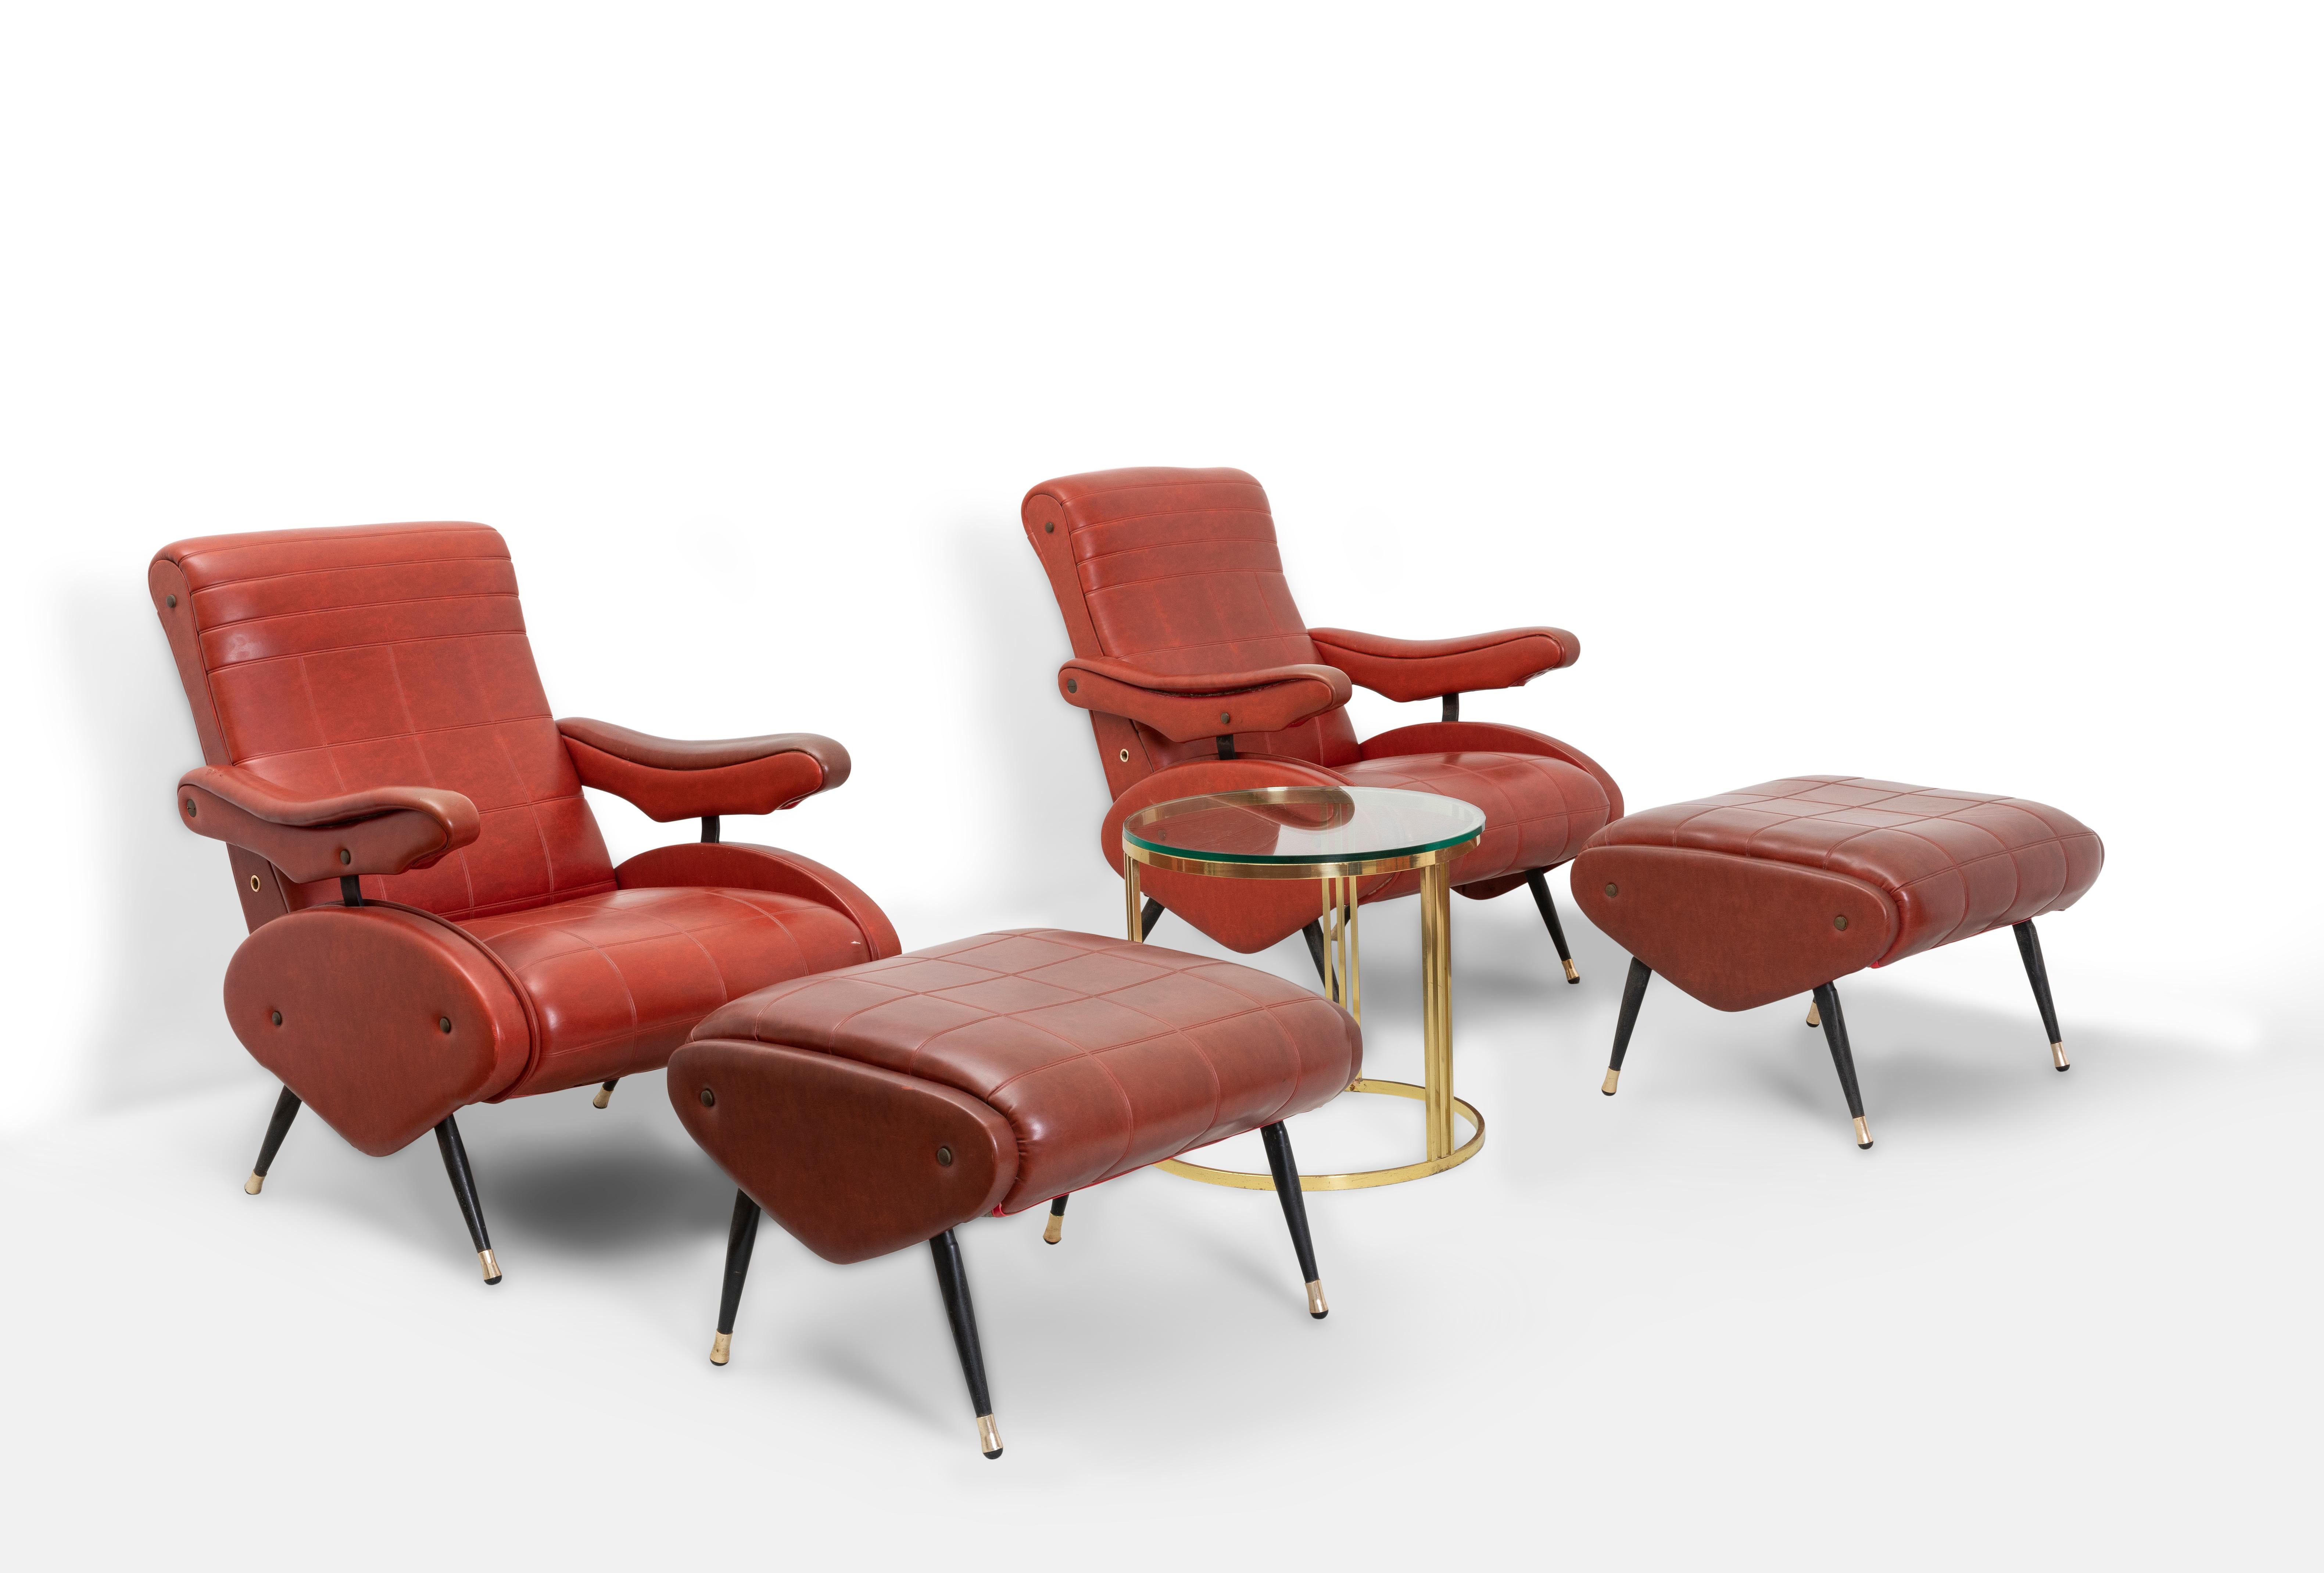 Italian Nello Pini Prod. Novarredo c. 1950-1960 Two reclining armchairs and two pouffs